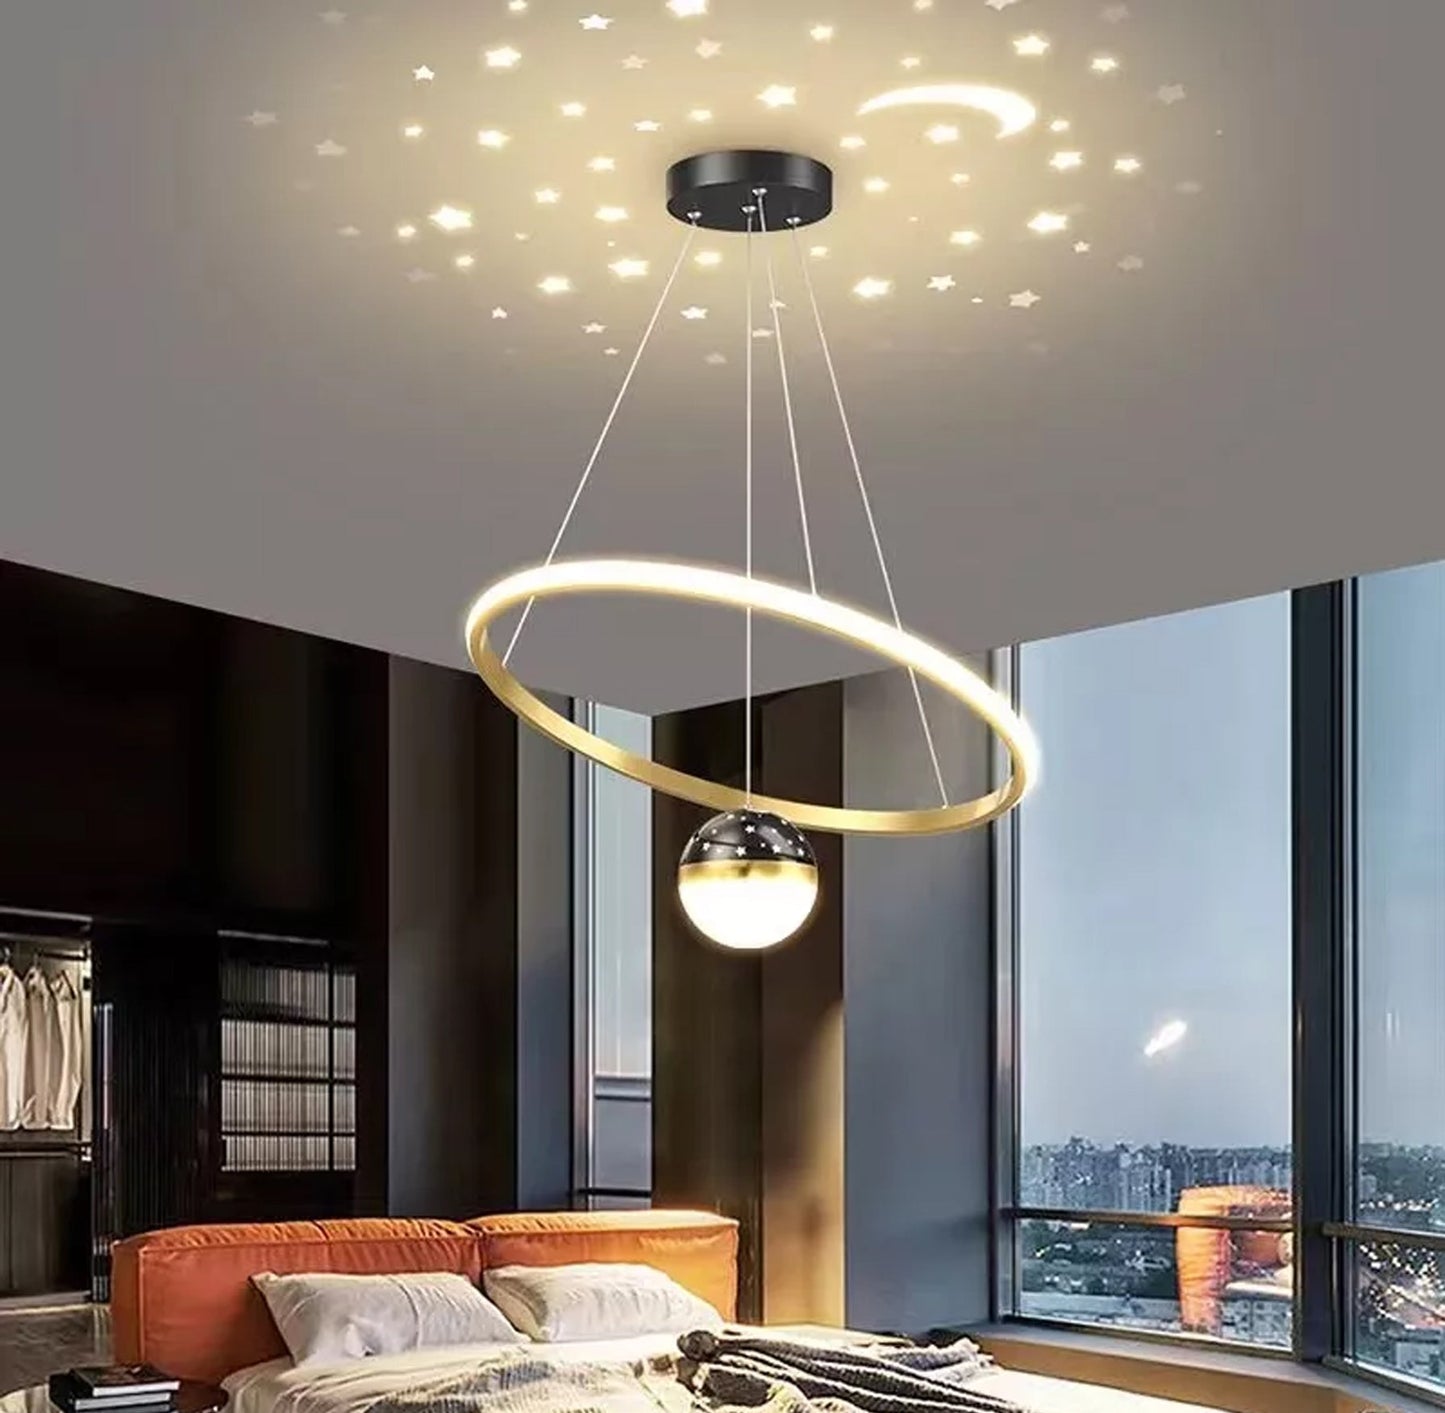 Creative postmodern design chandelier, moon and star reflection LED lighting